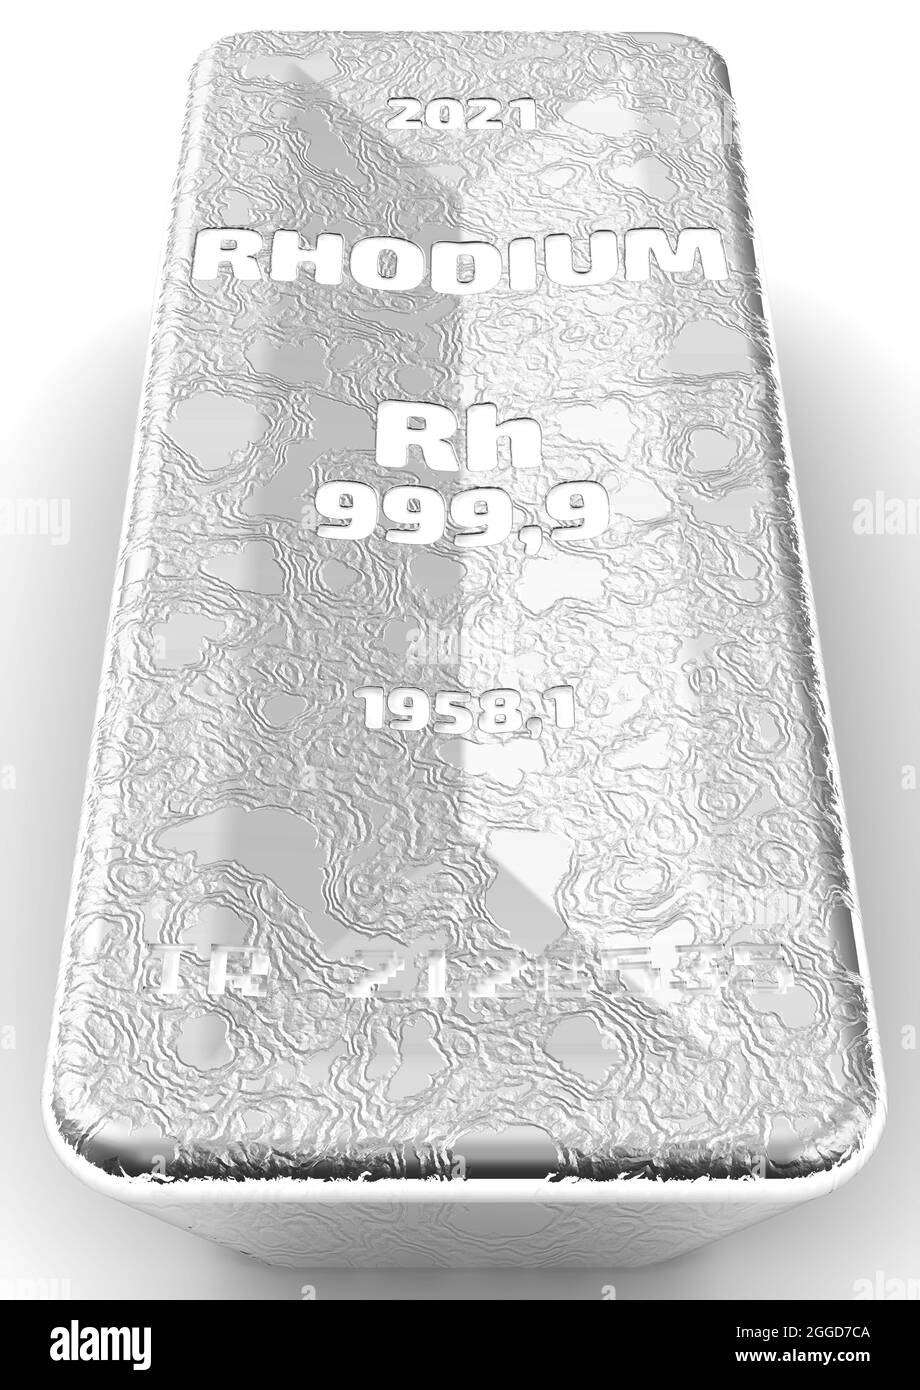 The highest standard rhodium bar. One ingot of 999.9 Fine Rhodium bar on white background. 3D illustration Stock Photo